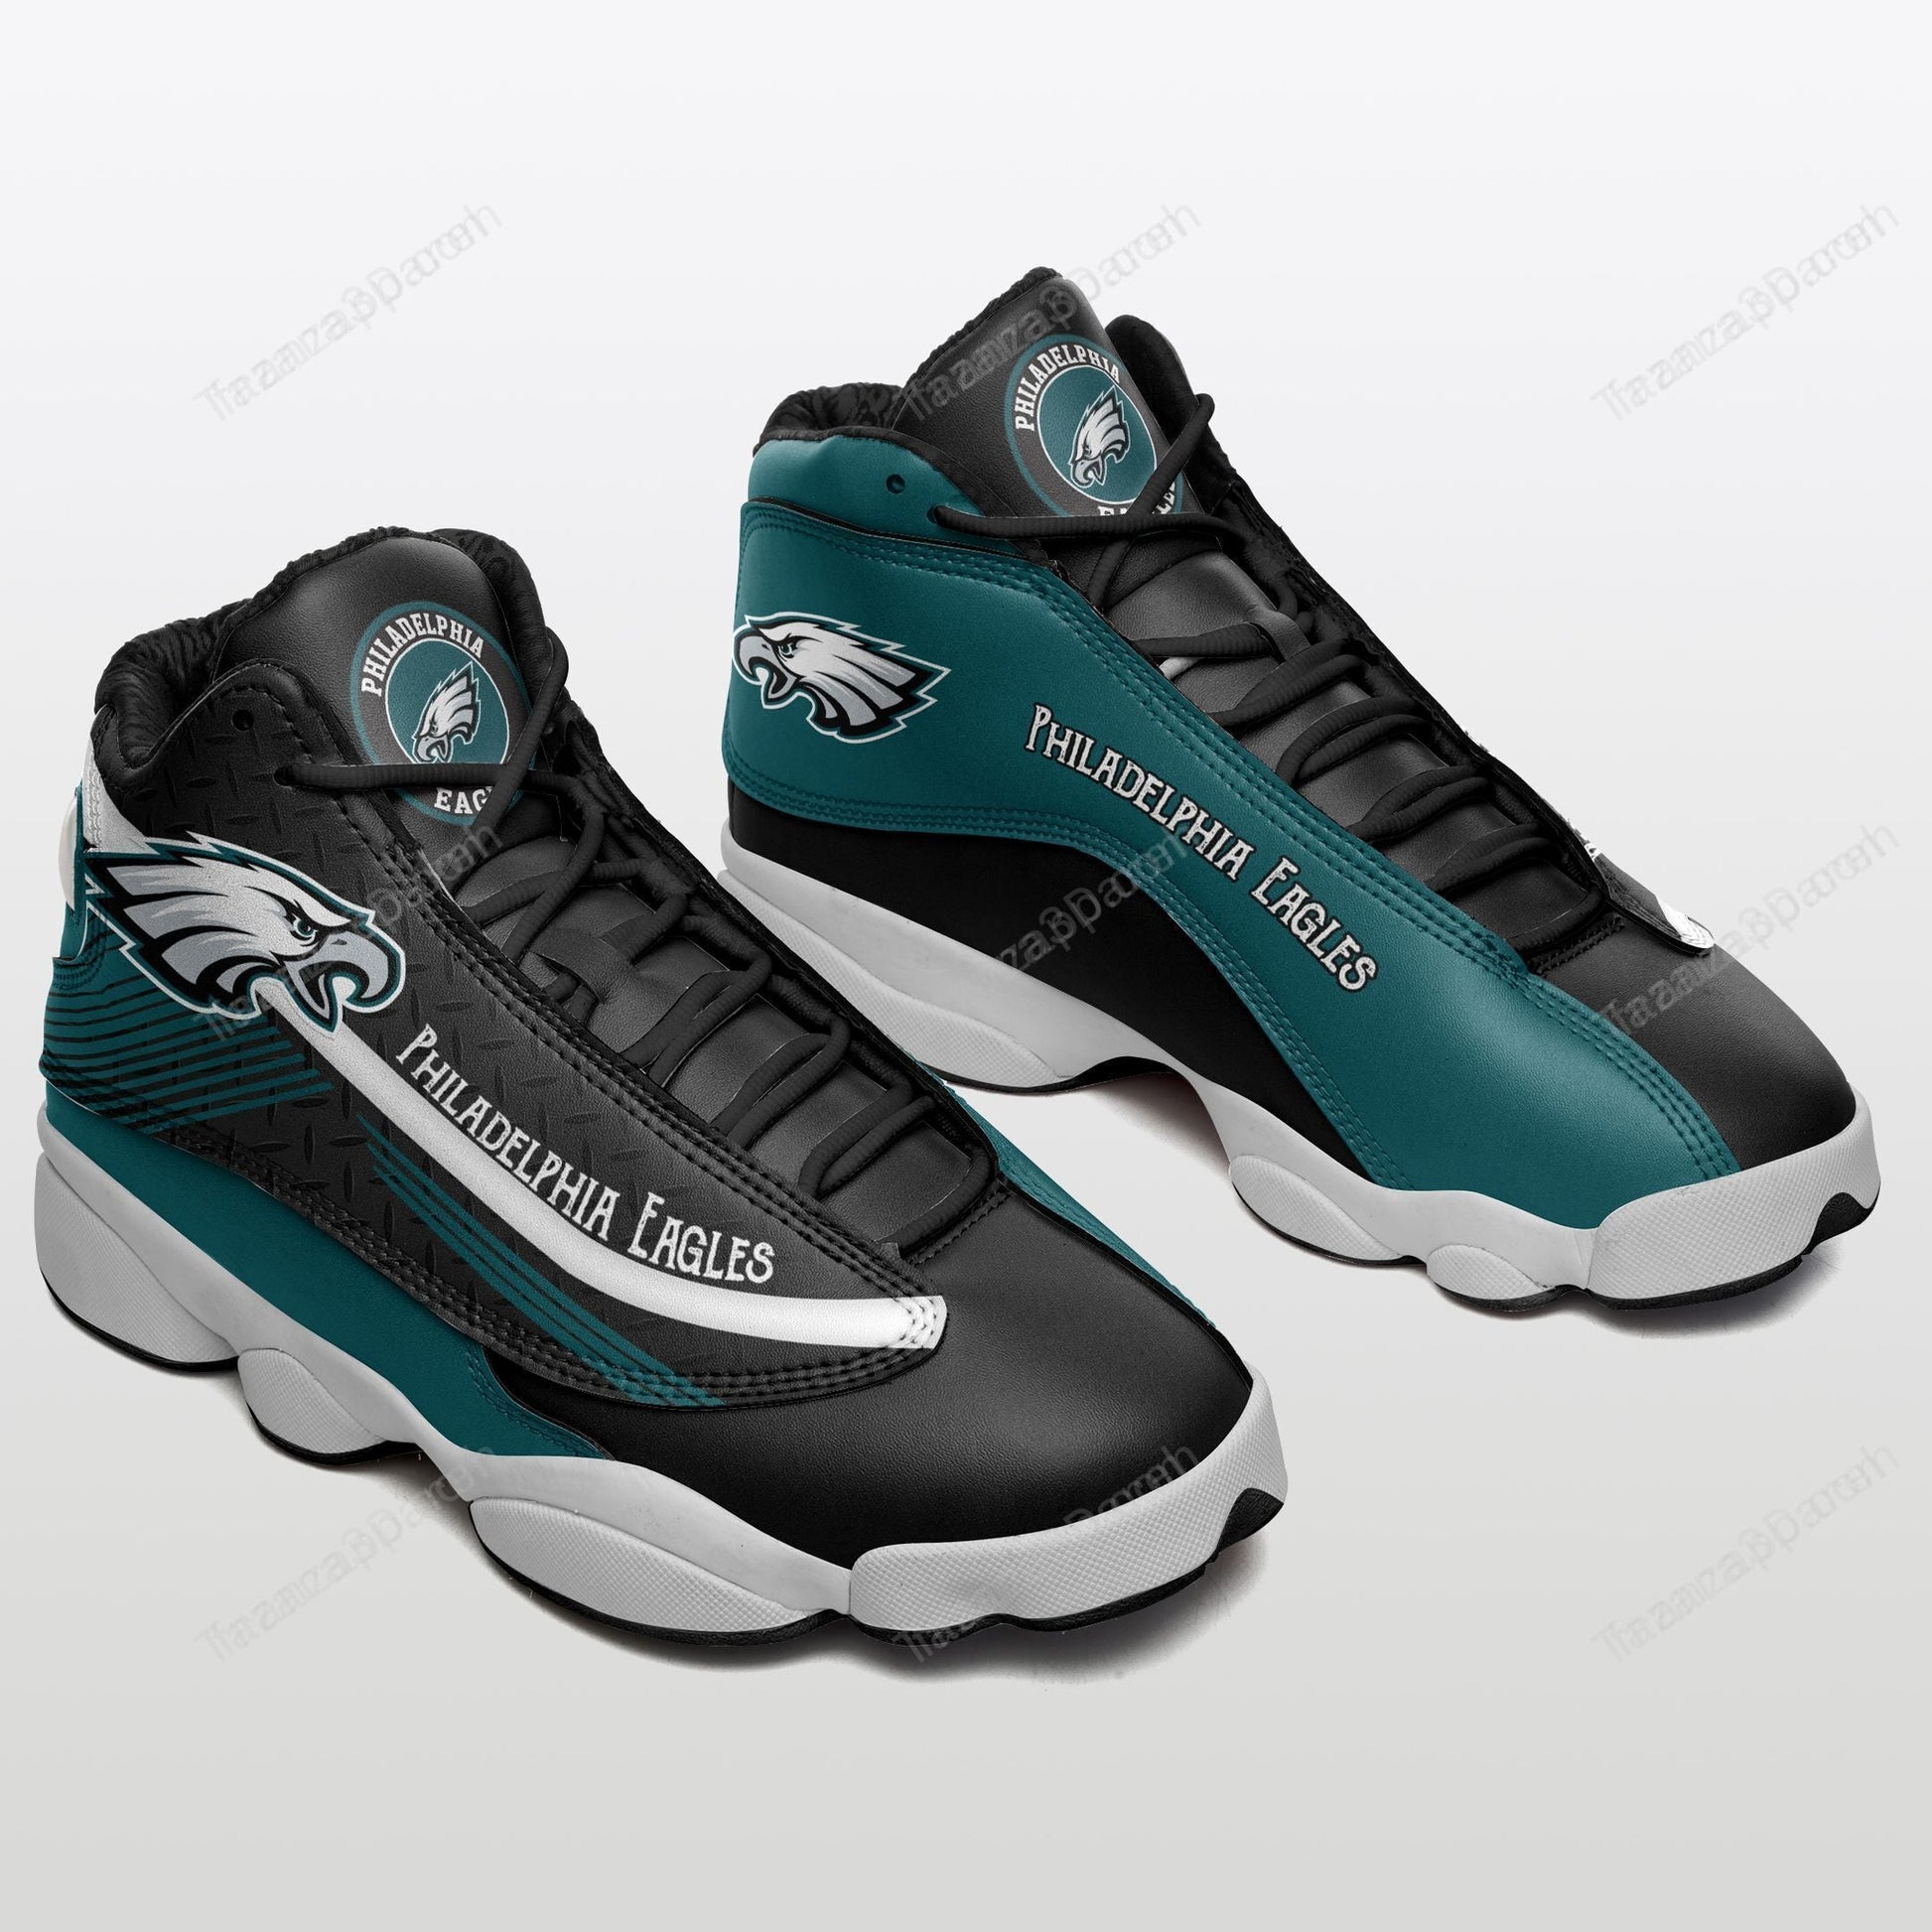 Philadelphia Eagles Custom Shoes Sneakers 605-Gear Wanta